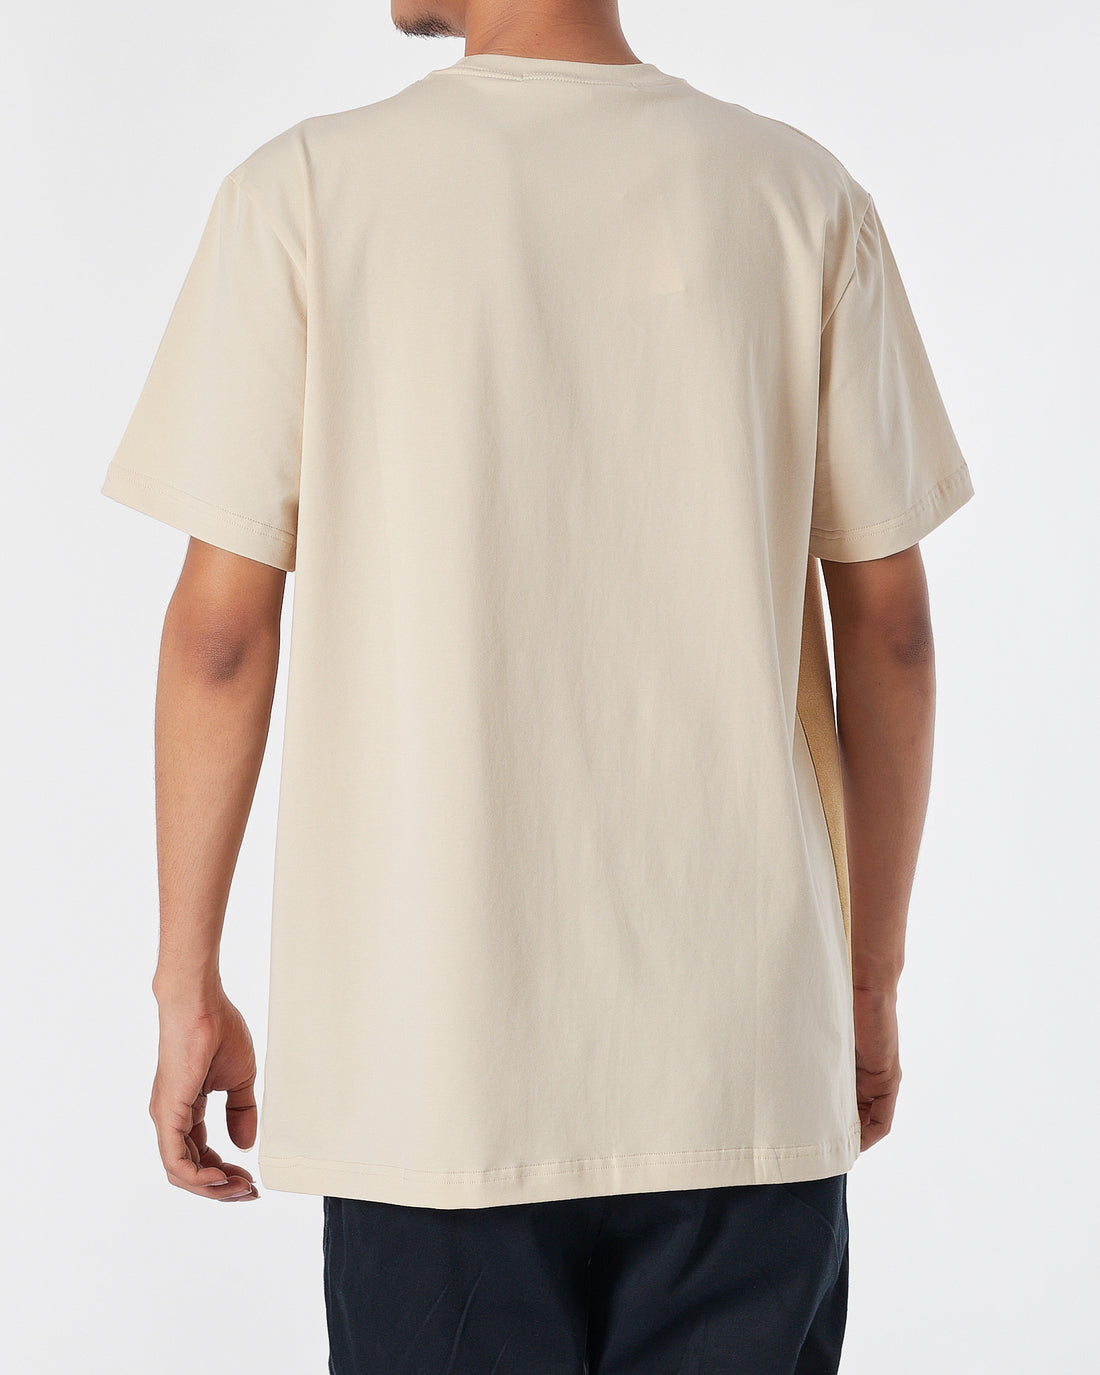 CK Gradient Color Men Cream T-Shirt 14.90